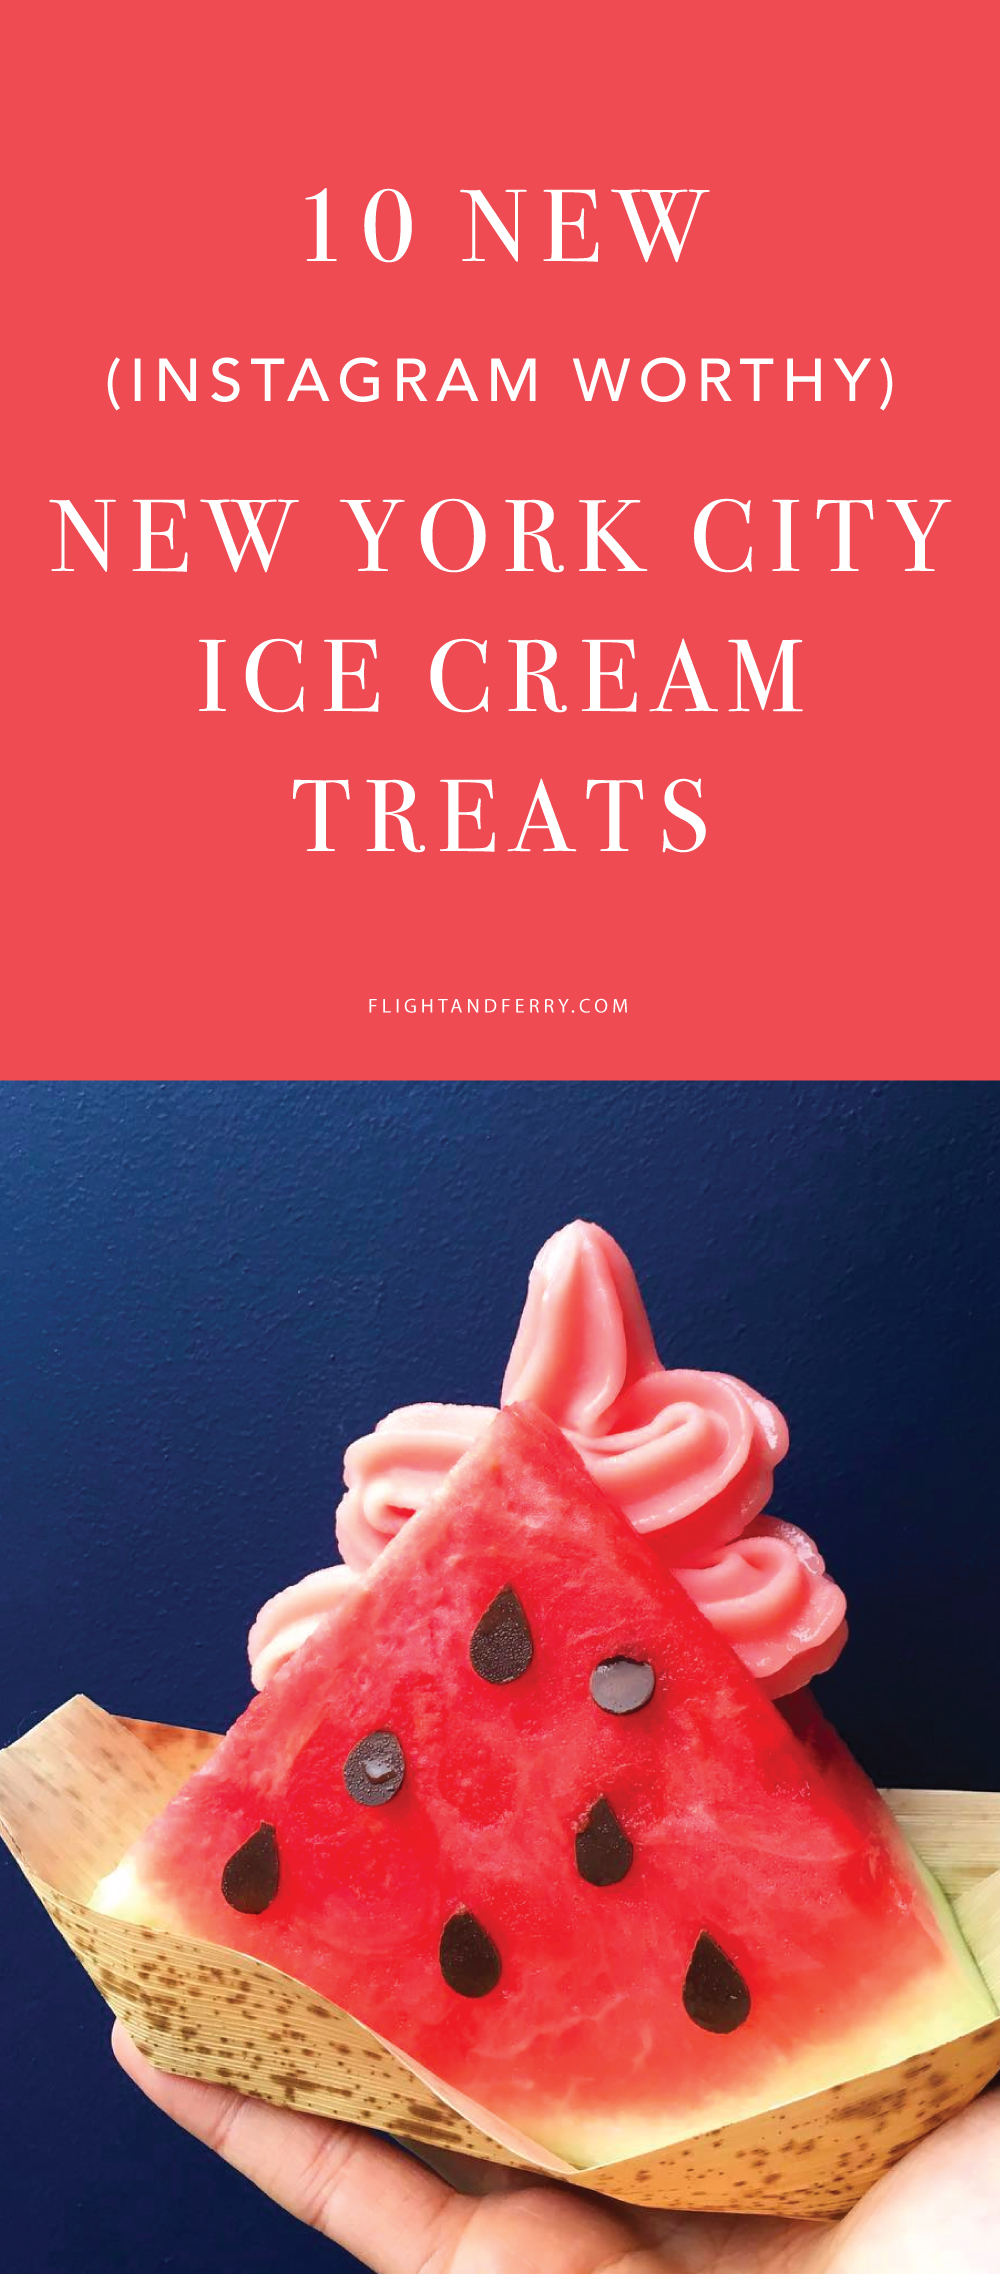 top new instagram worthy ice cream spots in NYC